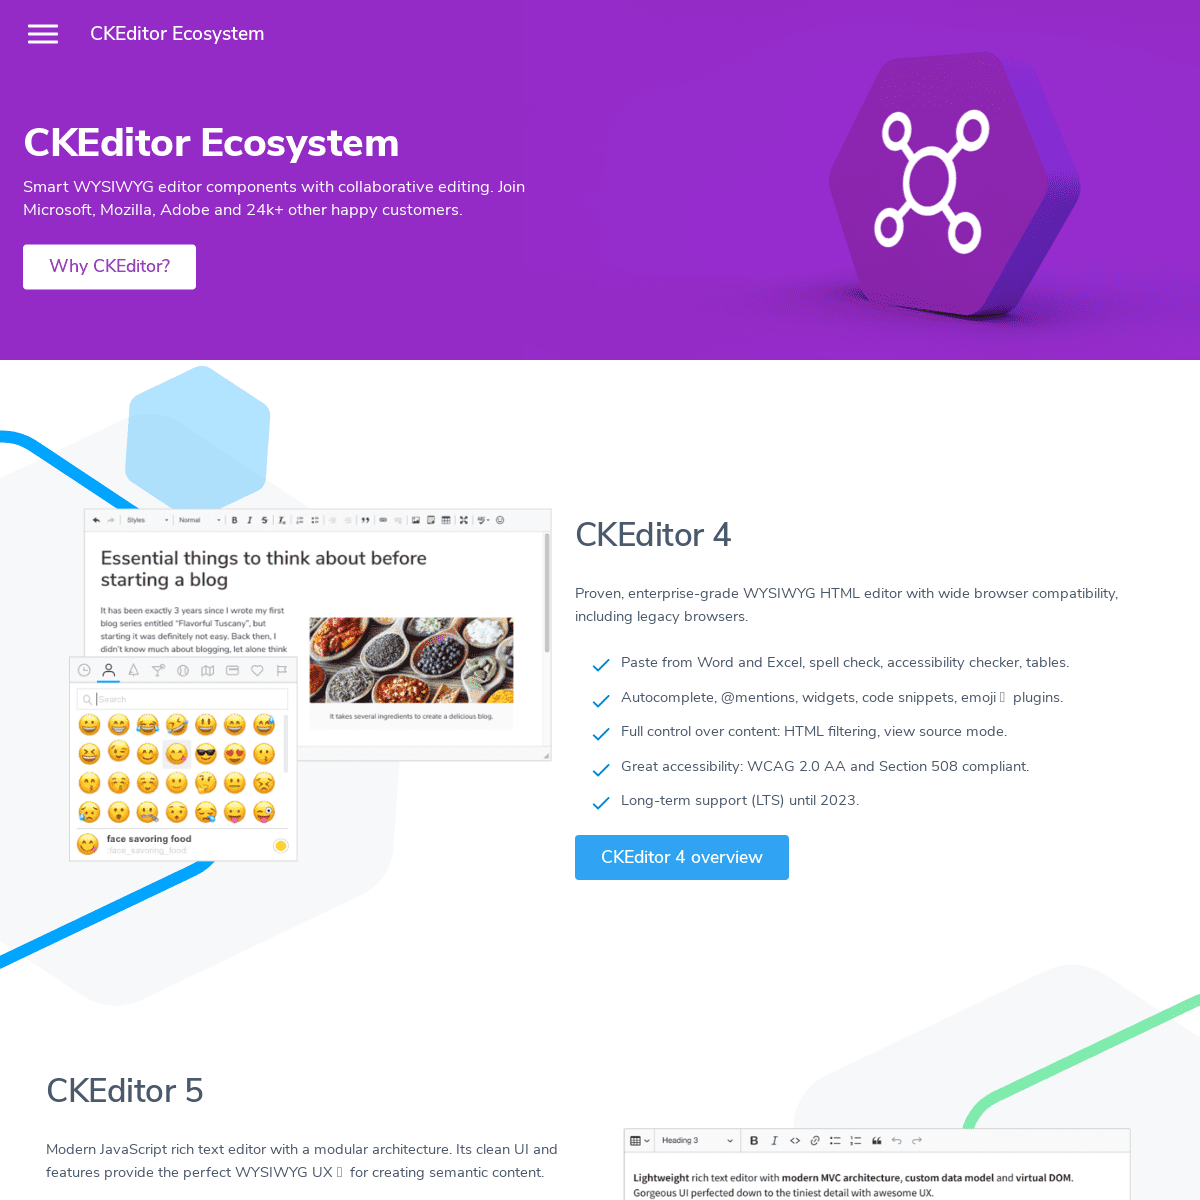 A complete backup of ckeditor.com